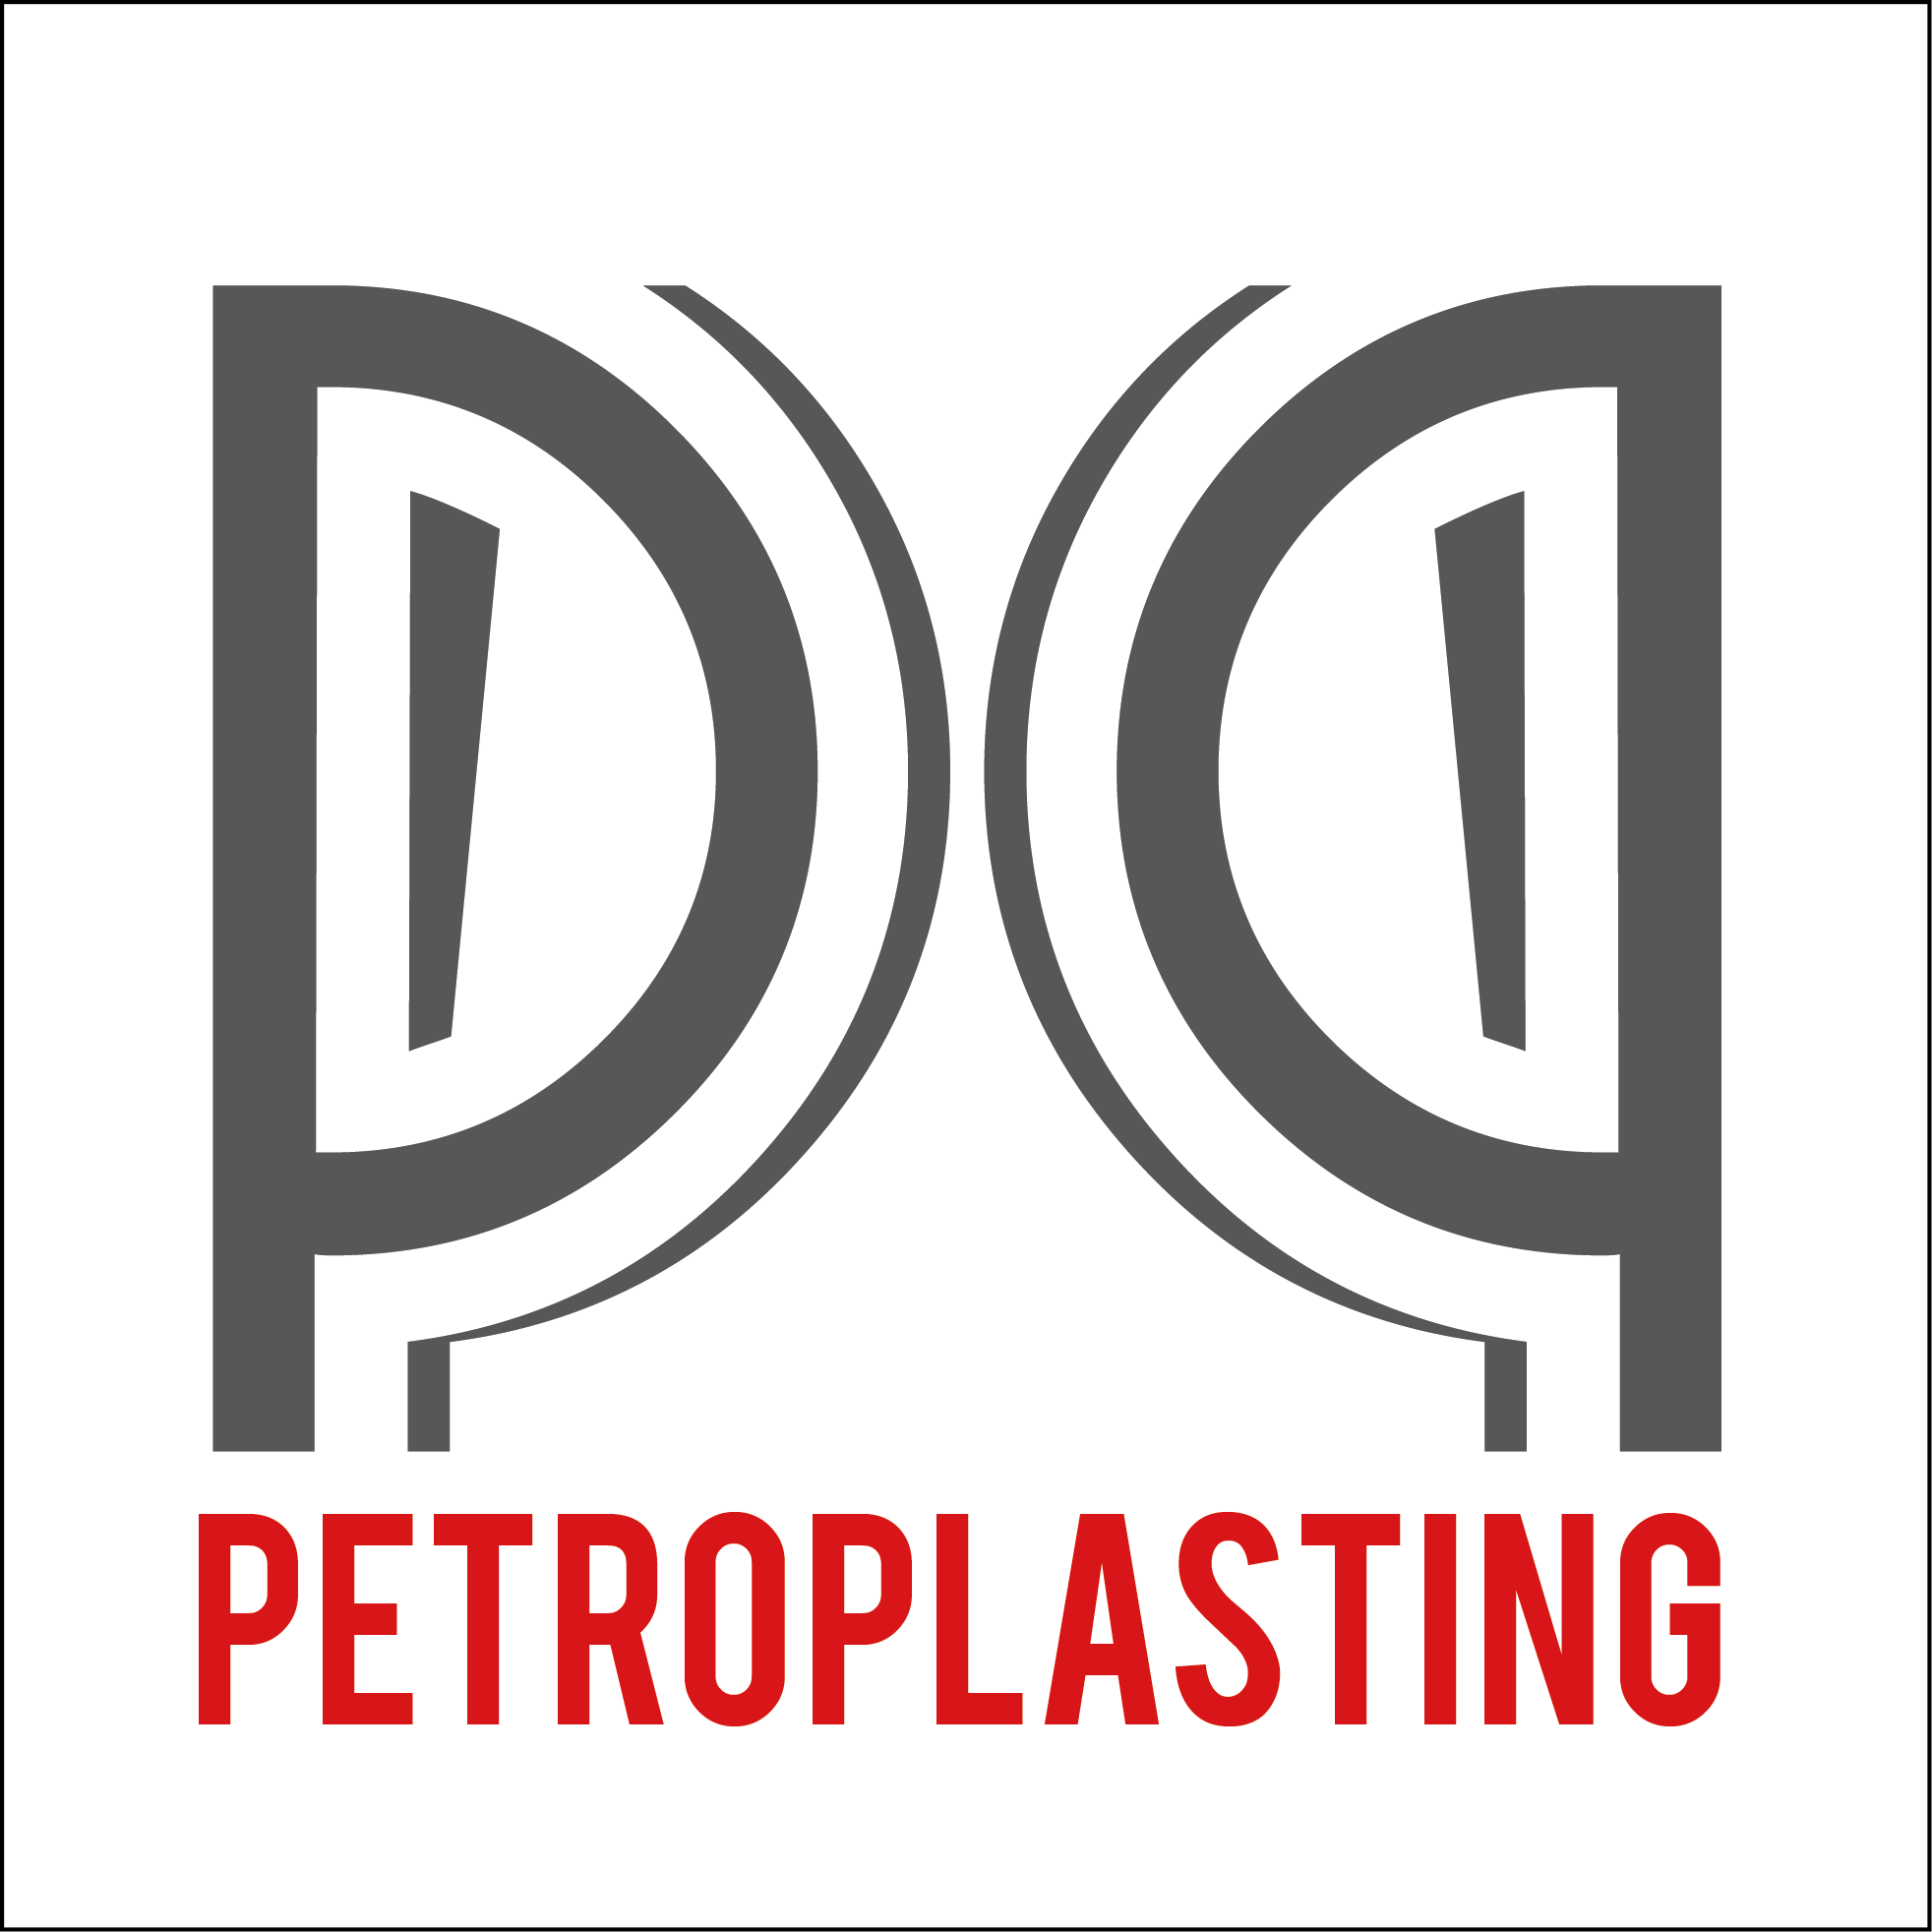 PetroPlasting